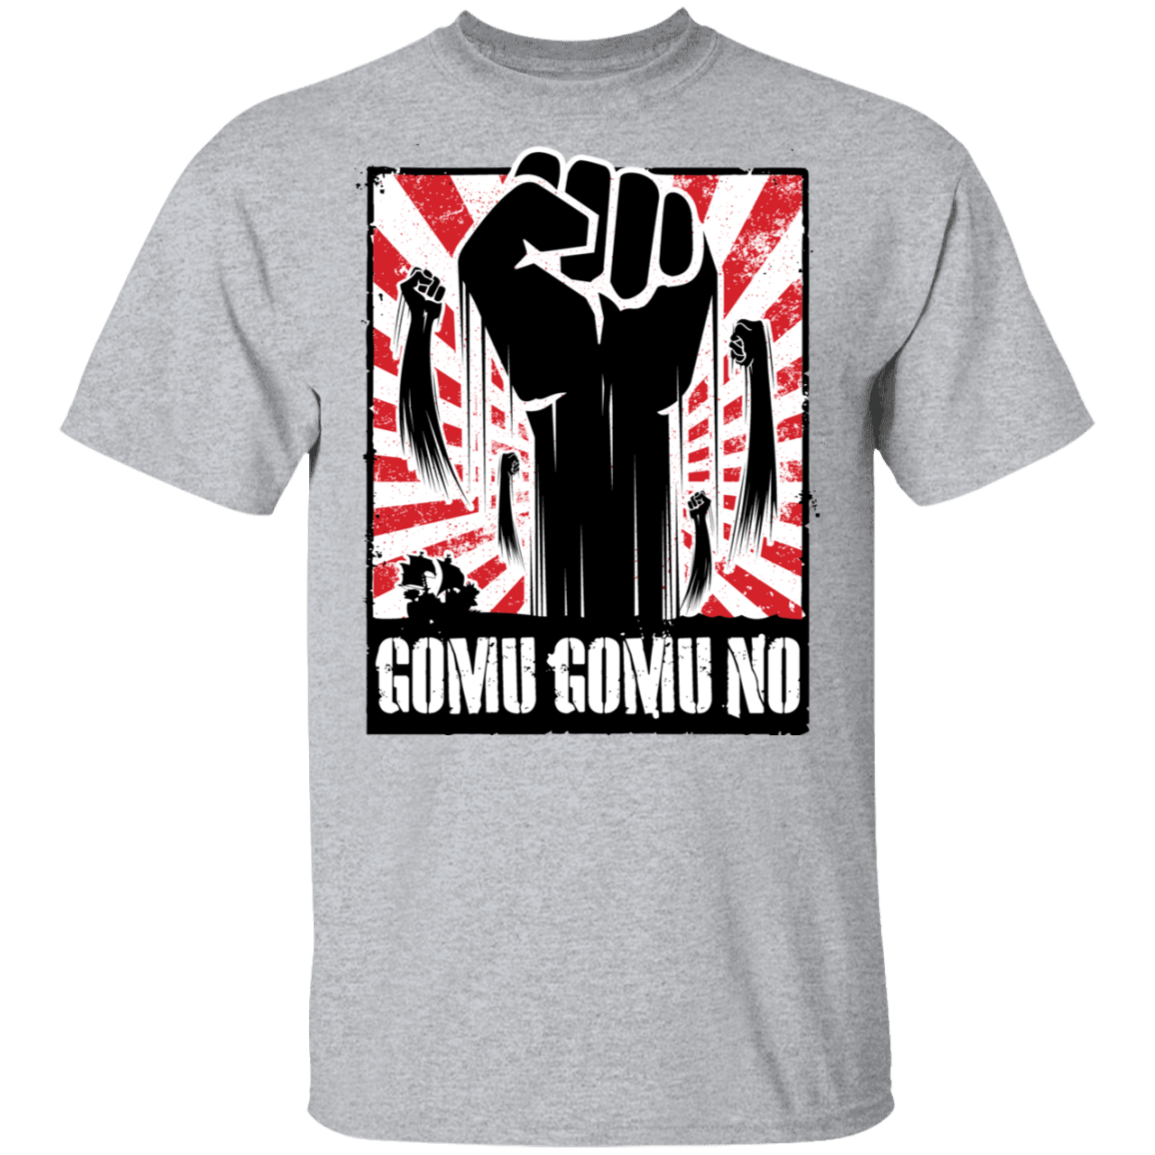 T-Shirts Sport Grey / S GOMU GOMU NO T-Shirt